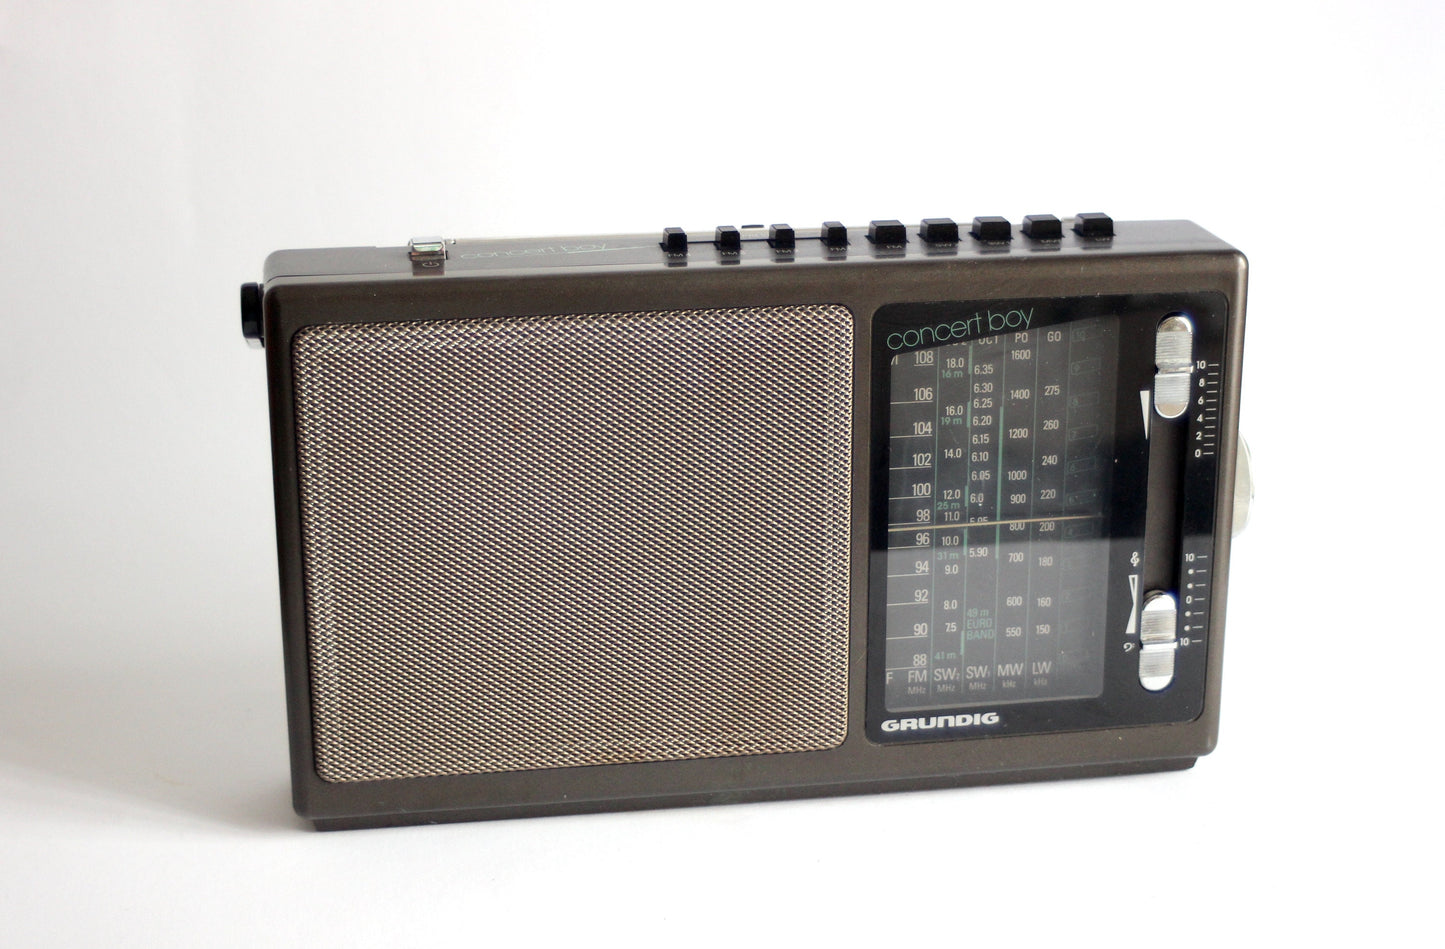 GRUNDIG Concert Boy 225 Portable Radio fm/sw/mw/lw. Broadcast receiver. Germany 1987